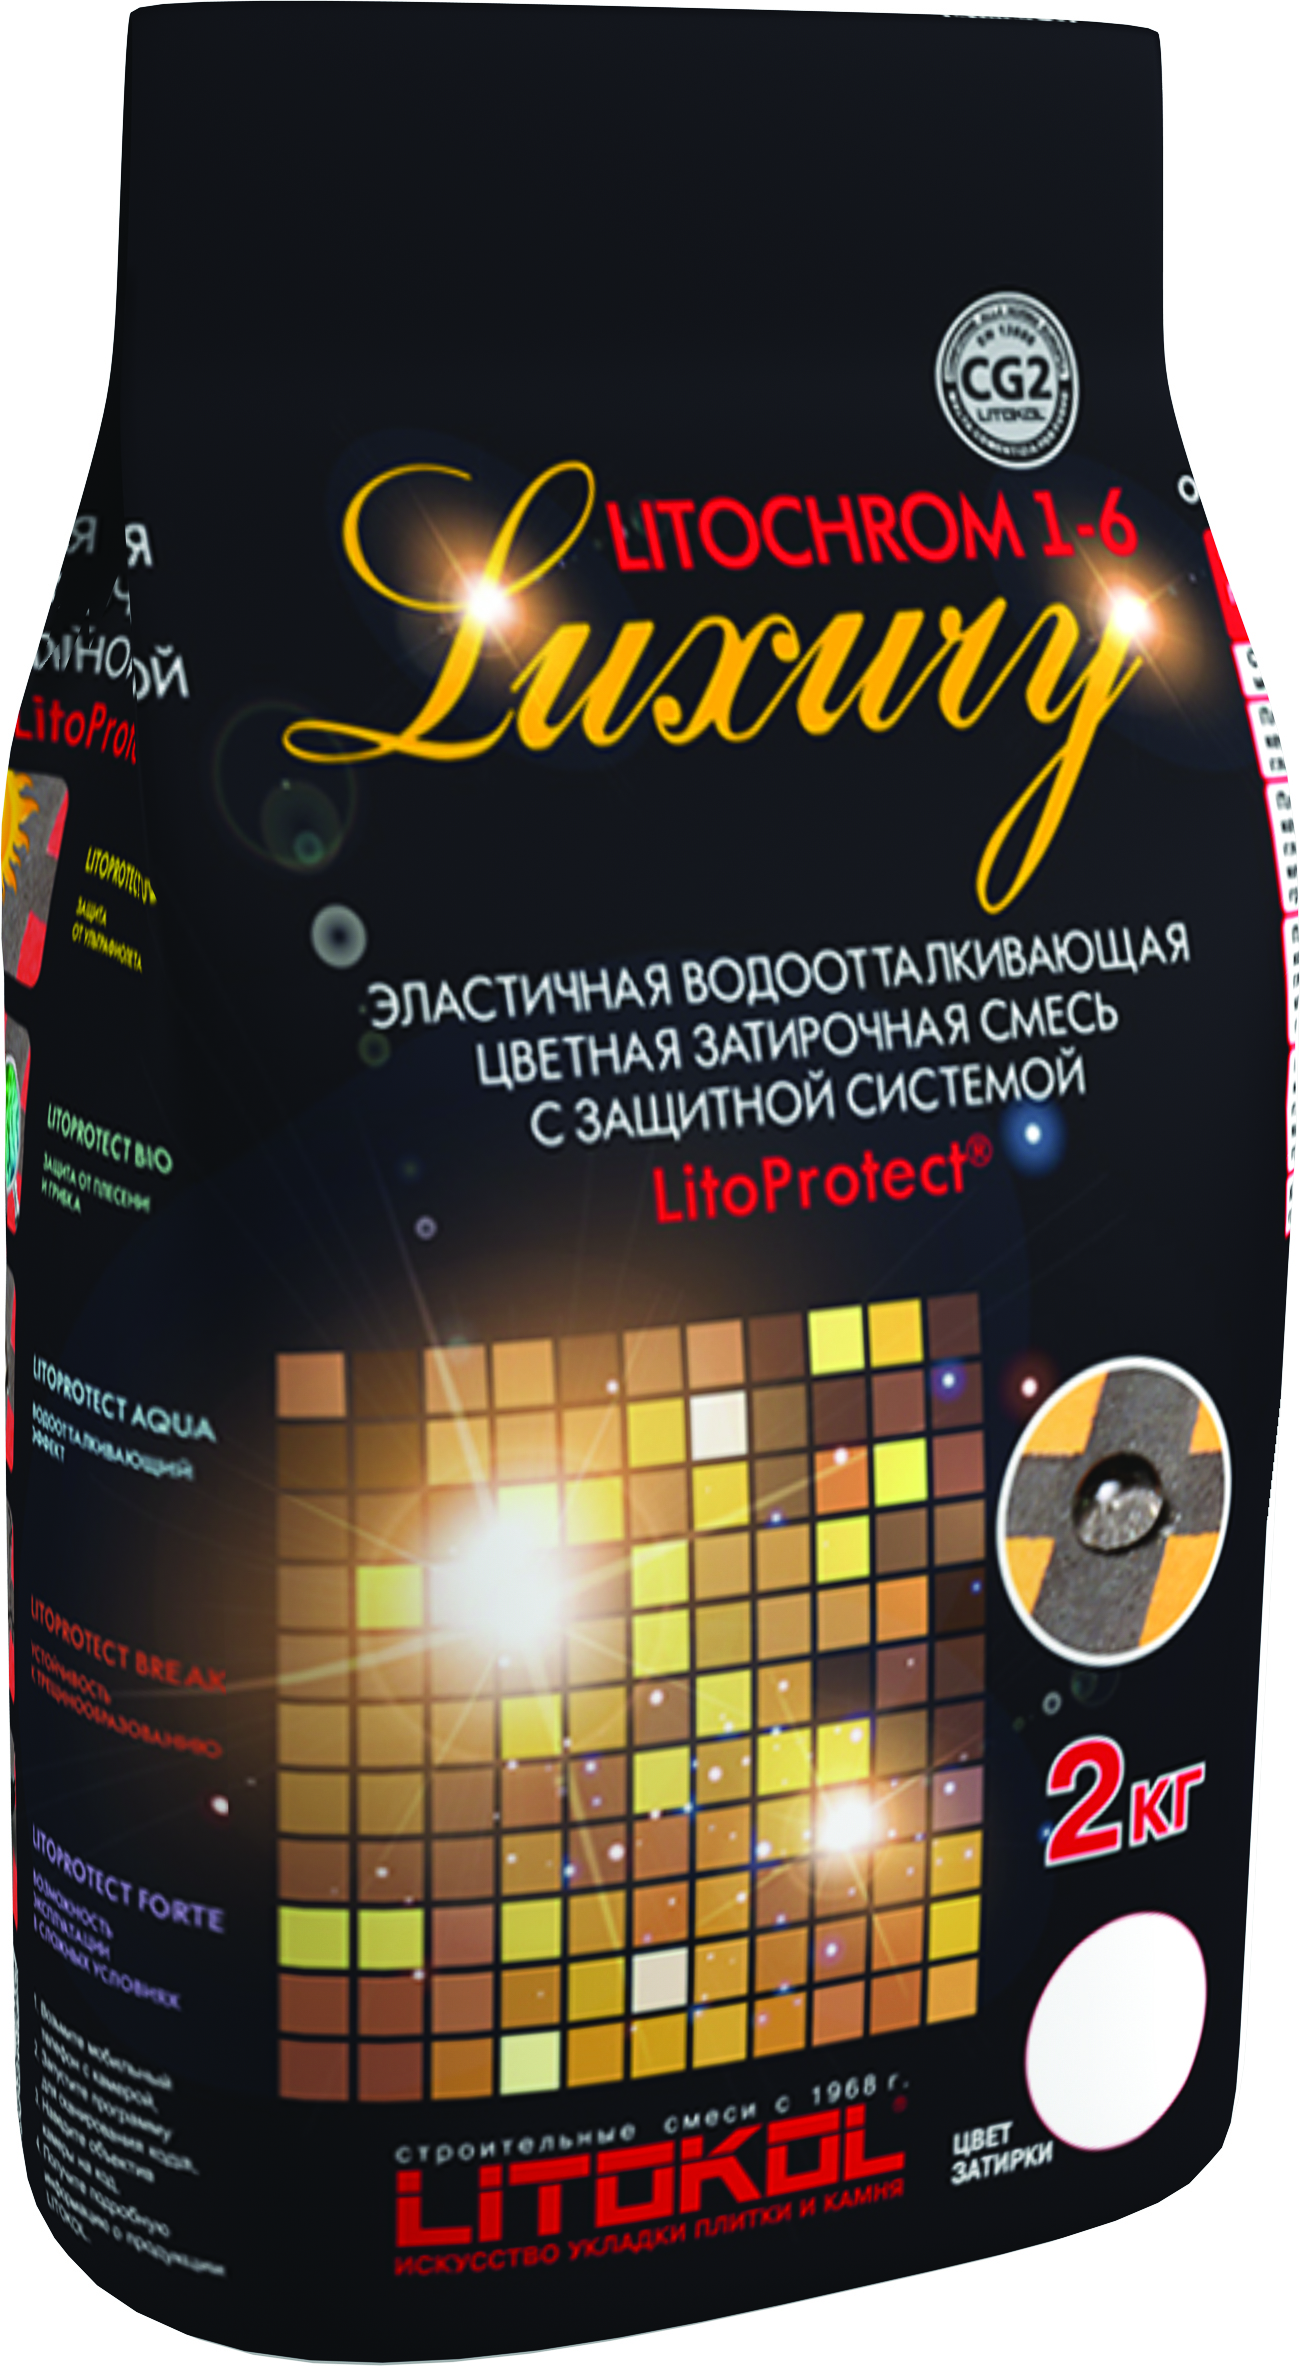 Купить Litokol Litochrom 1-6 Luxury C.50, 2 кг